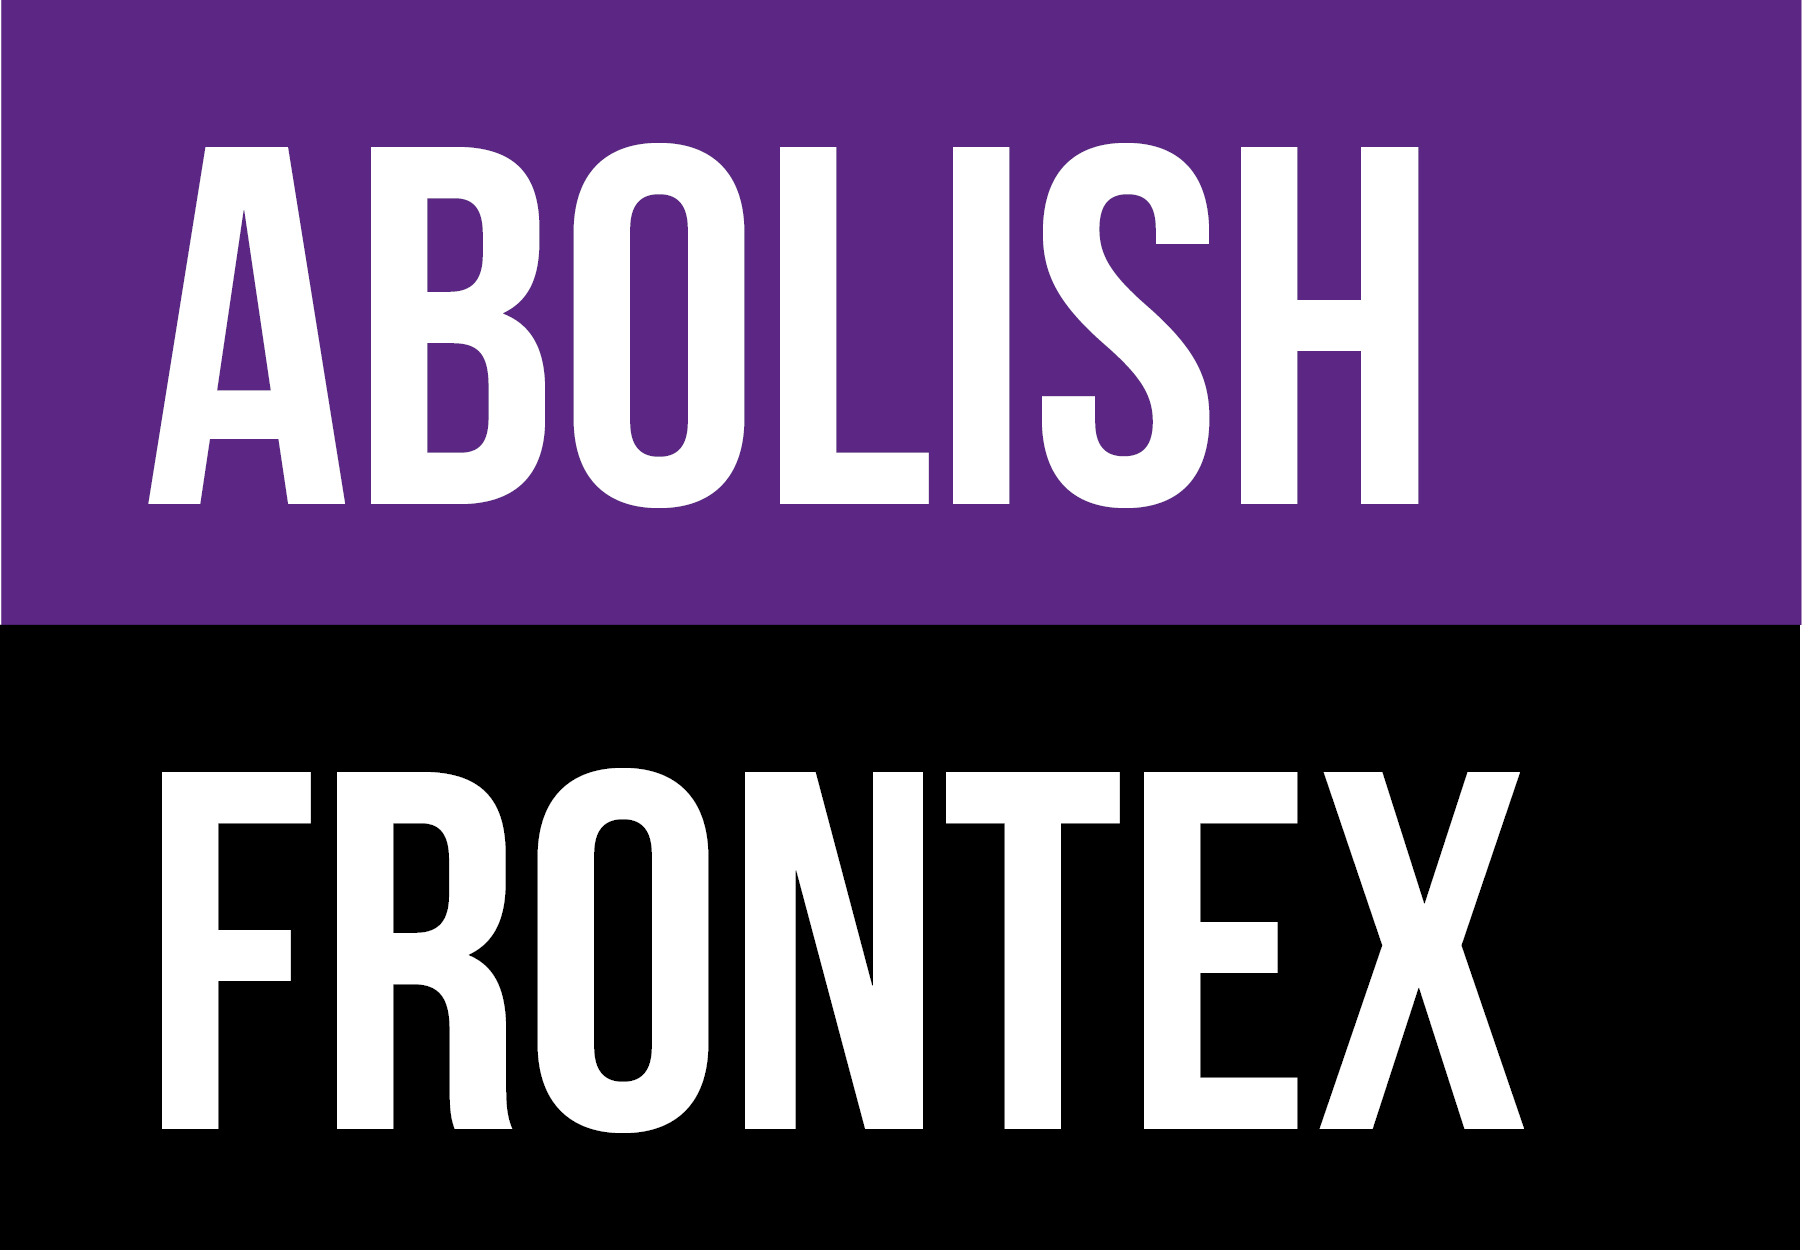 Abolish Frontex European Campaign